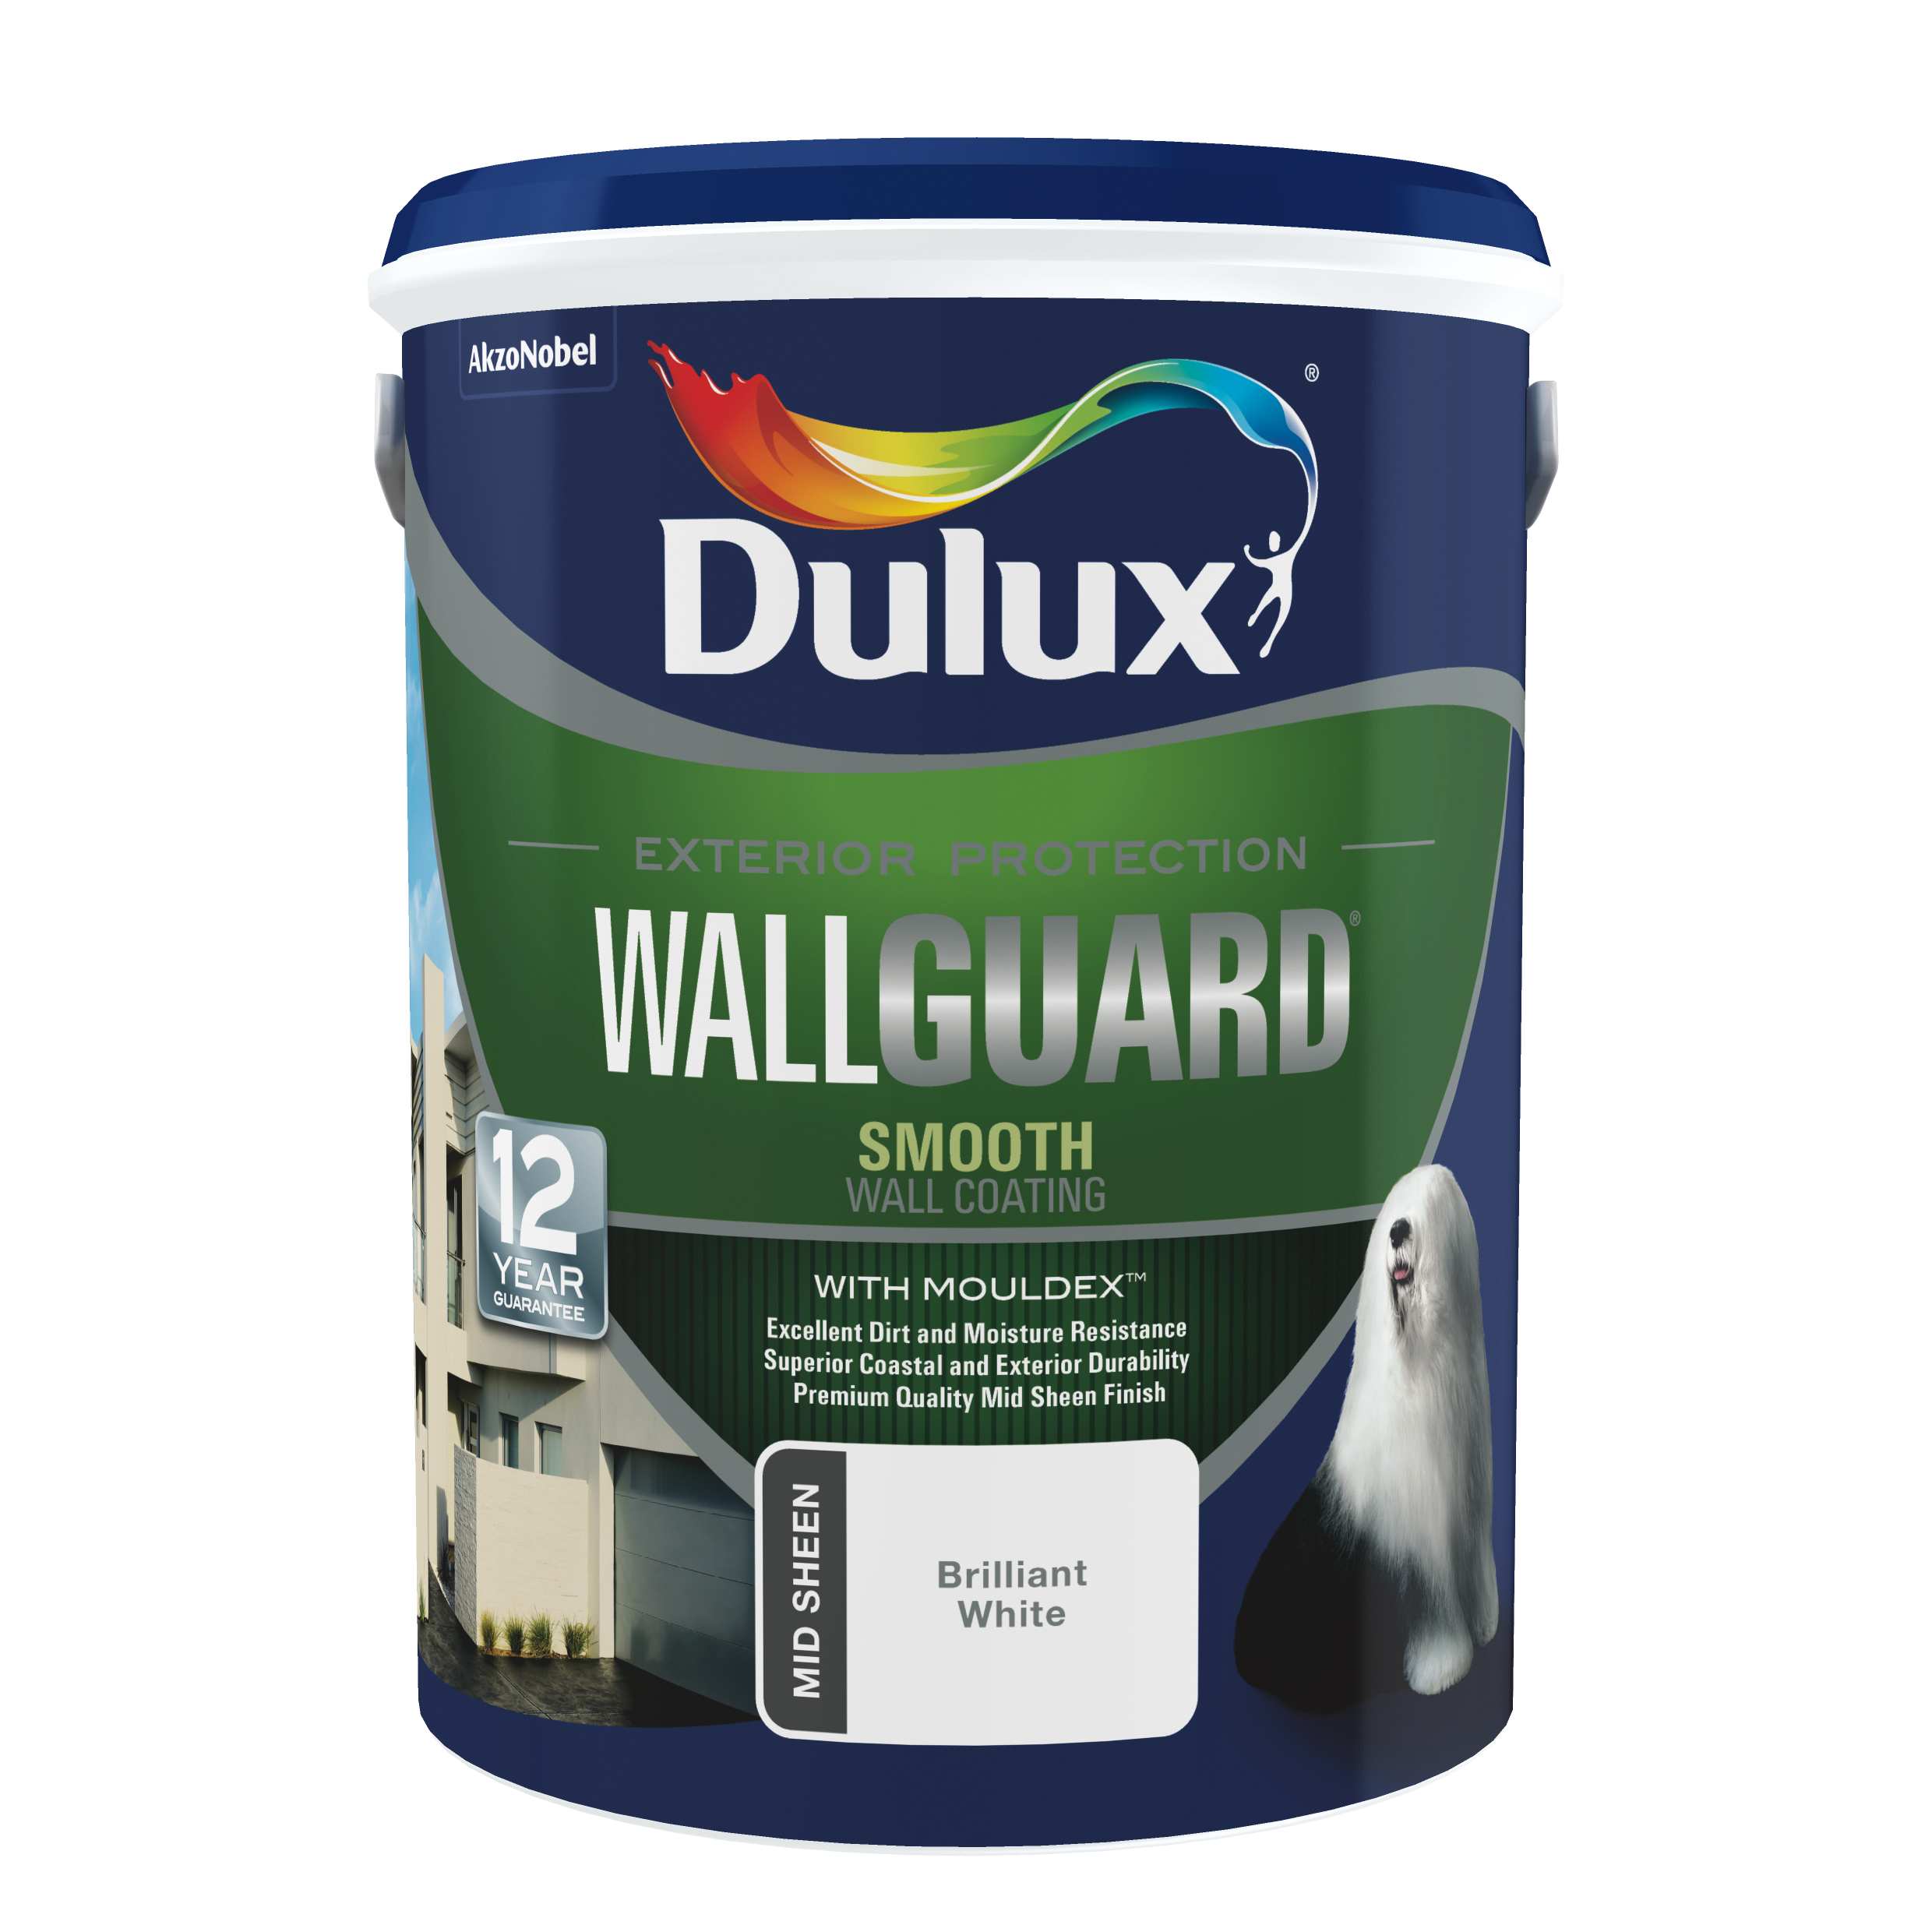 Dulux paint wallguard